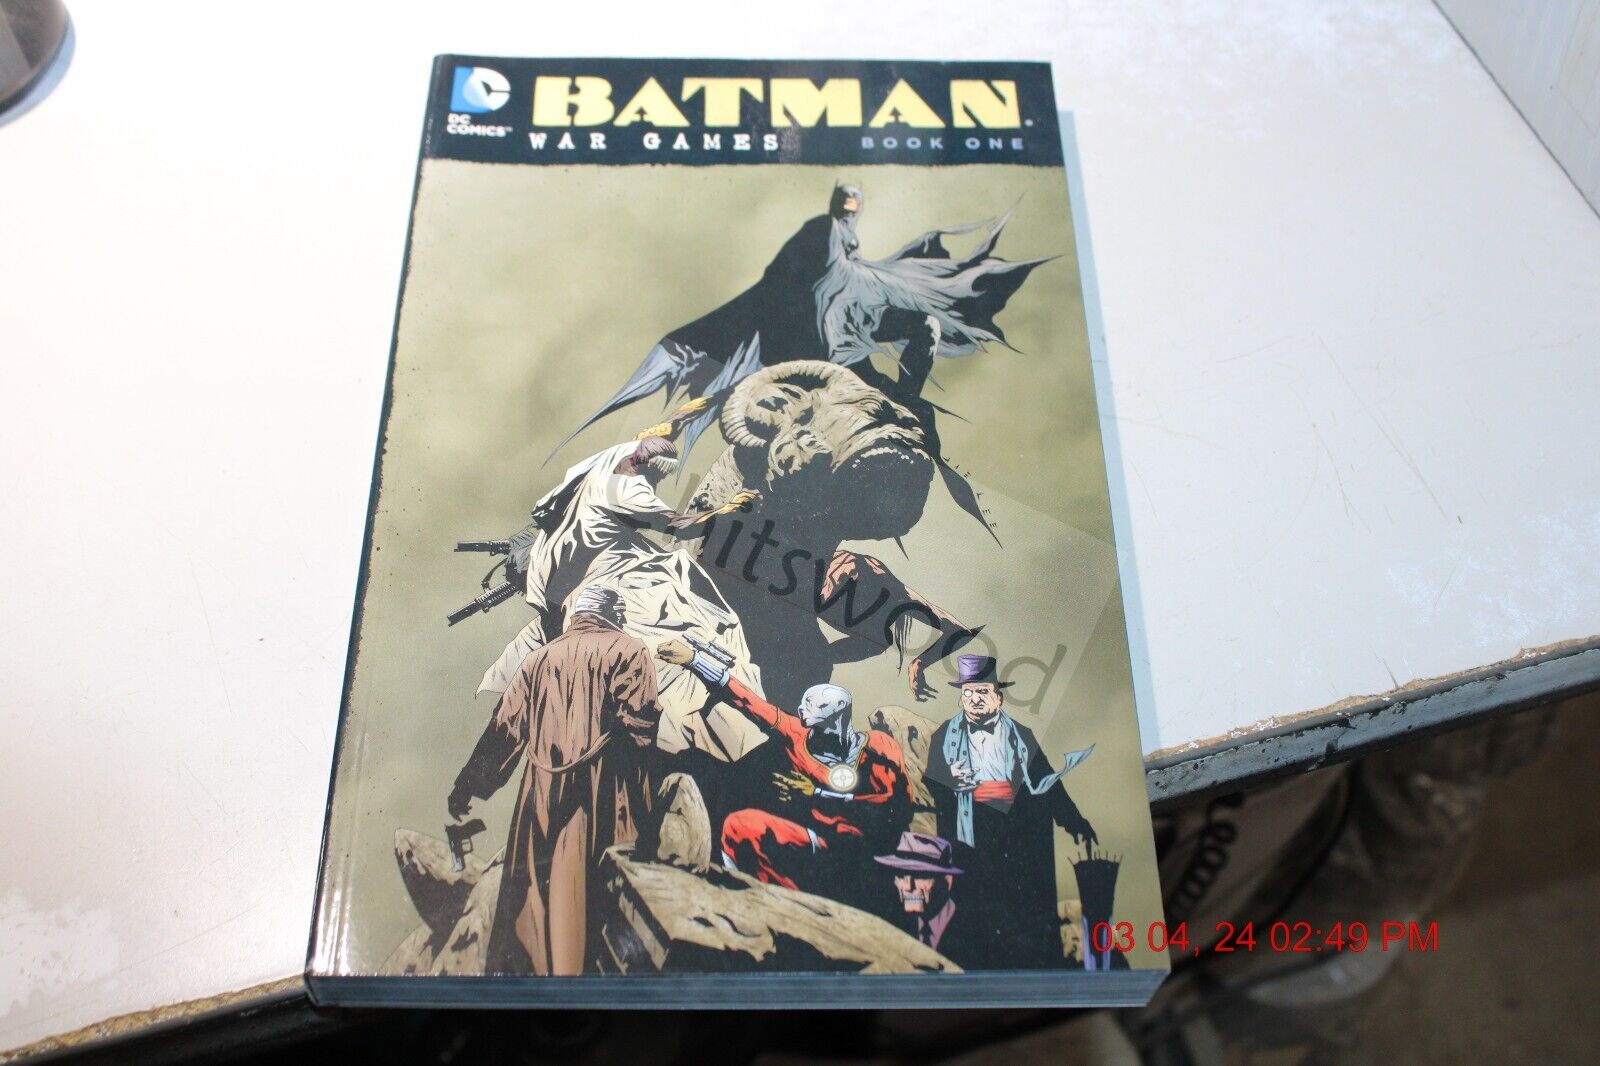 Batman: War Games Book 1 Trade Paperback New Trade Paperback NEW